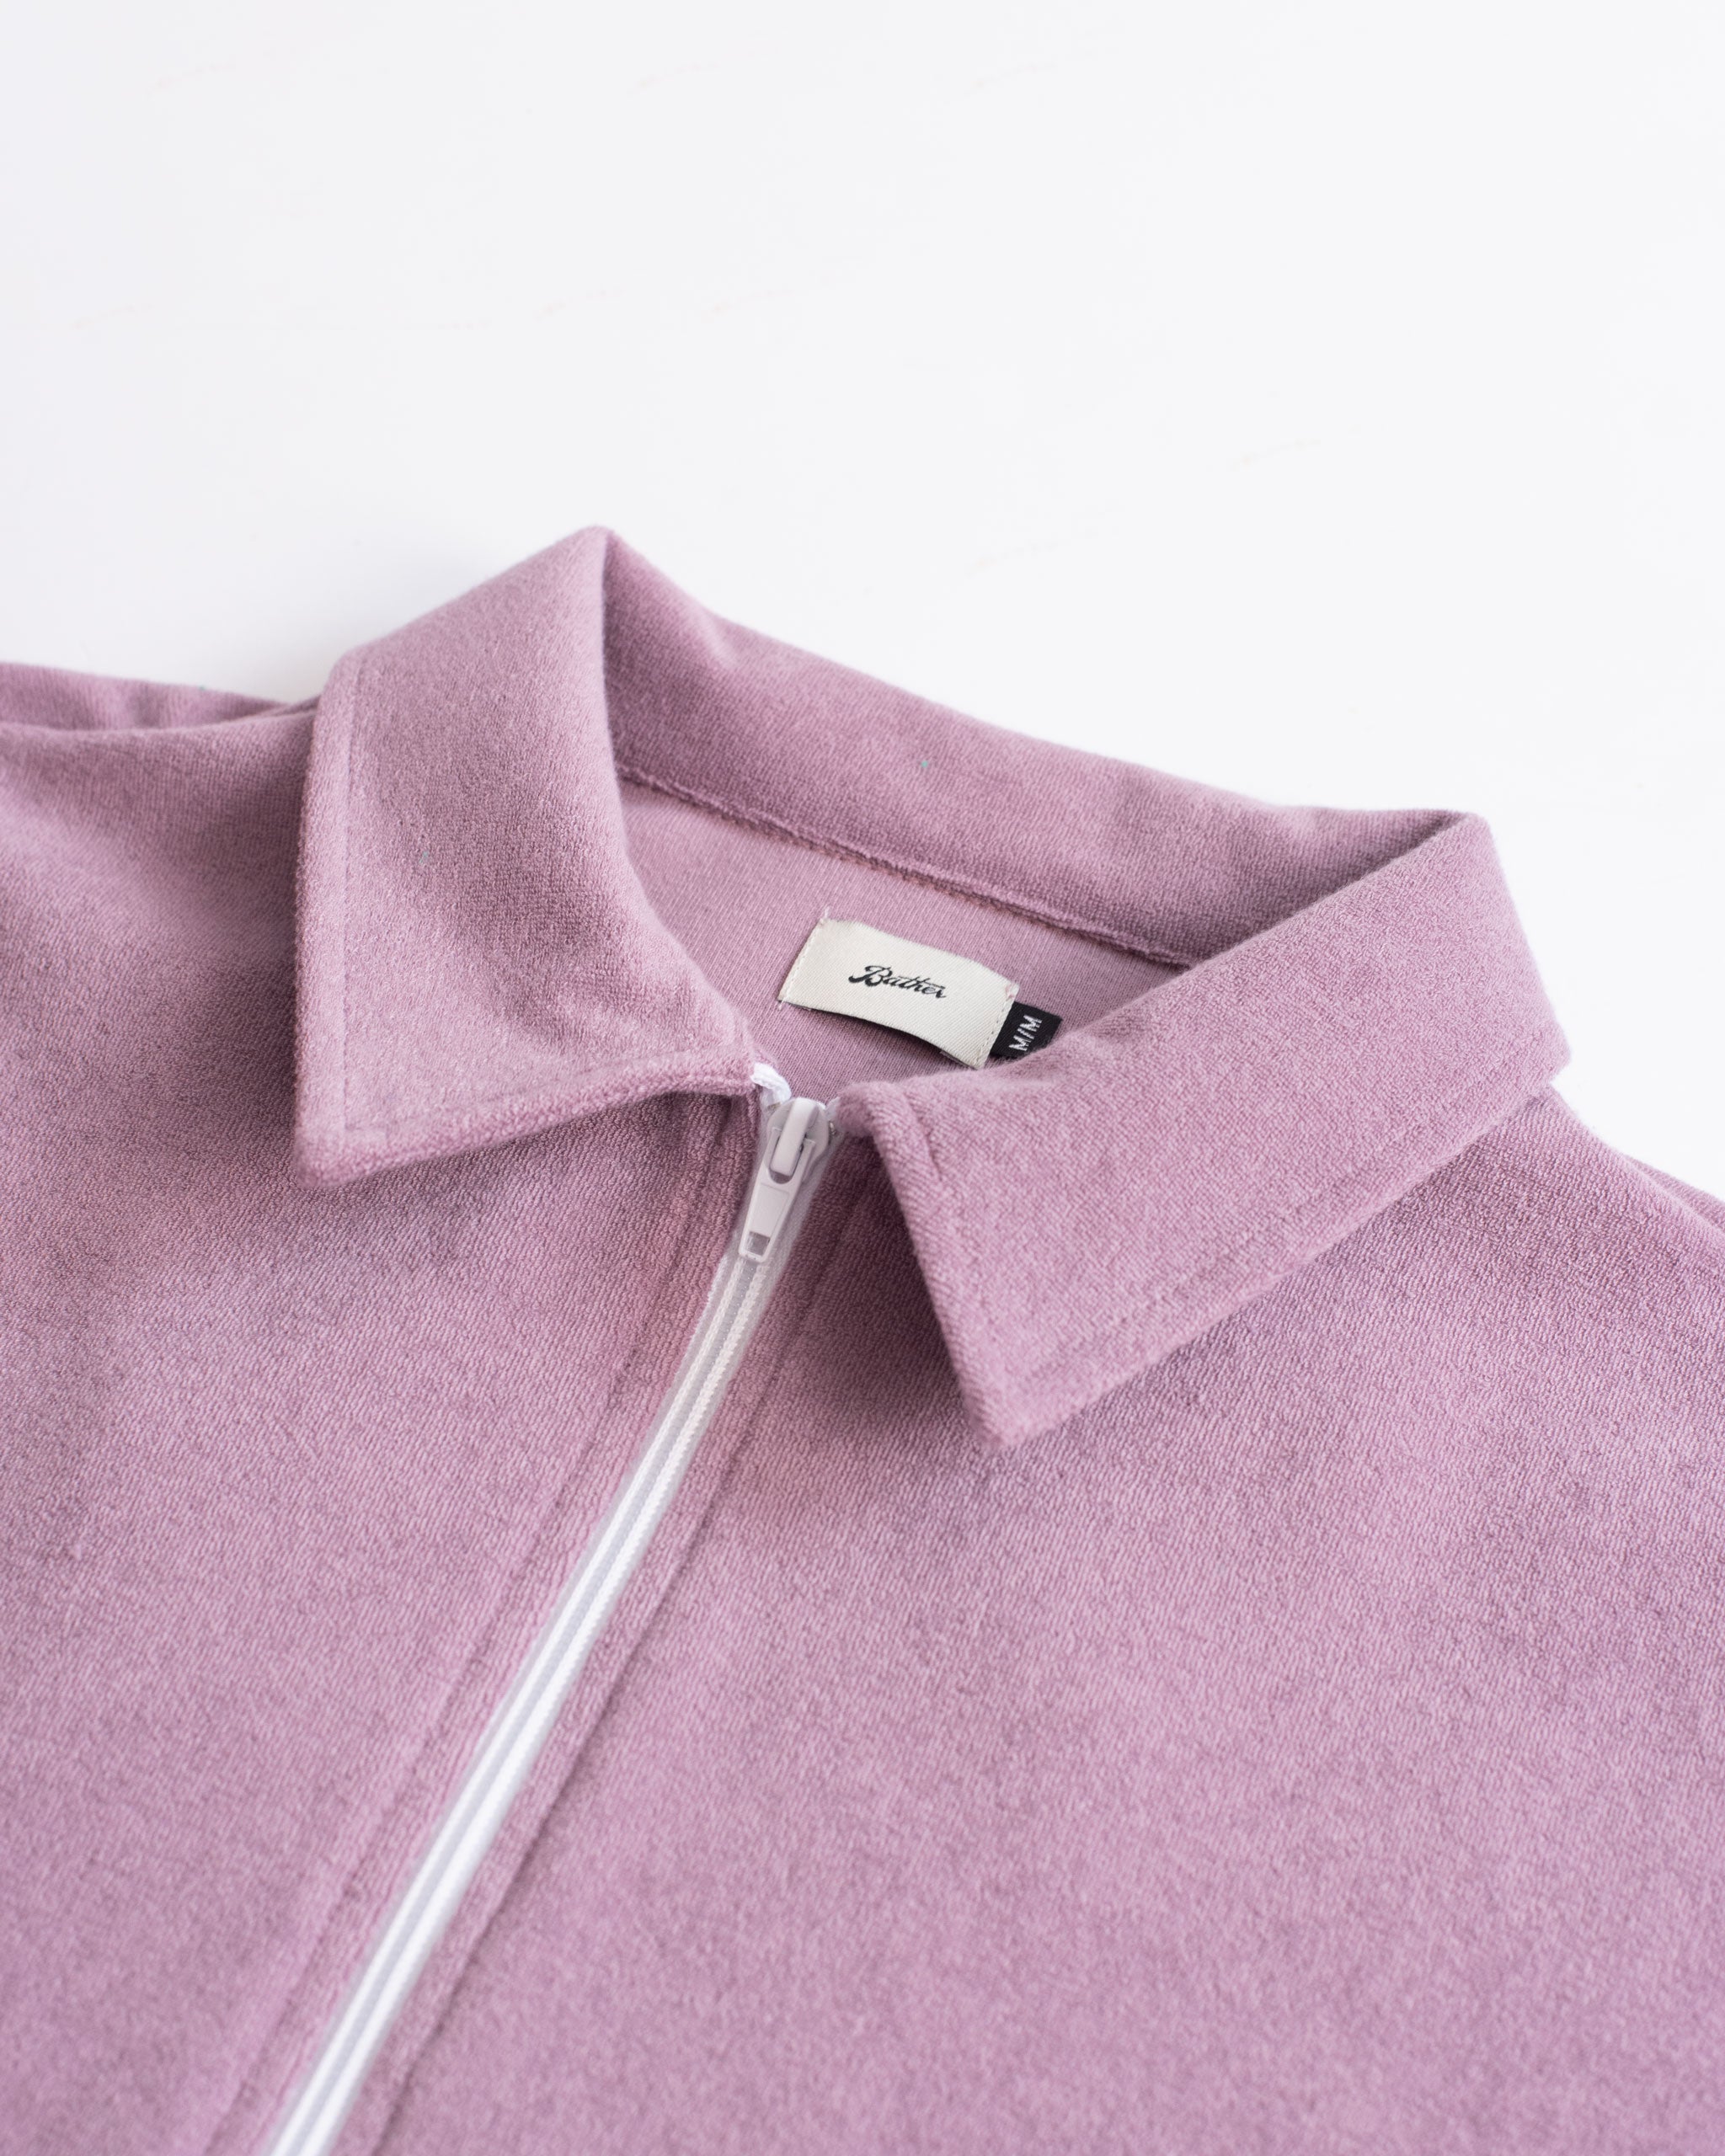 Collar close up shot of Purple Heather Terry Cotton Full-Zip Polo Shirt